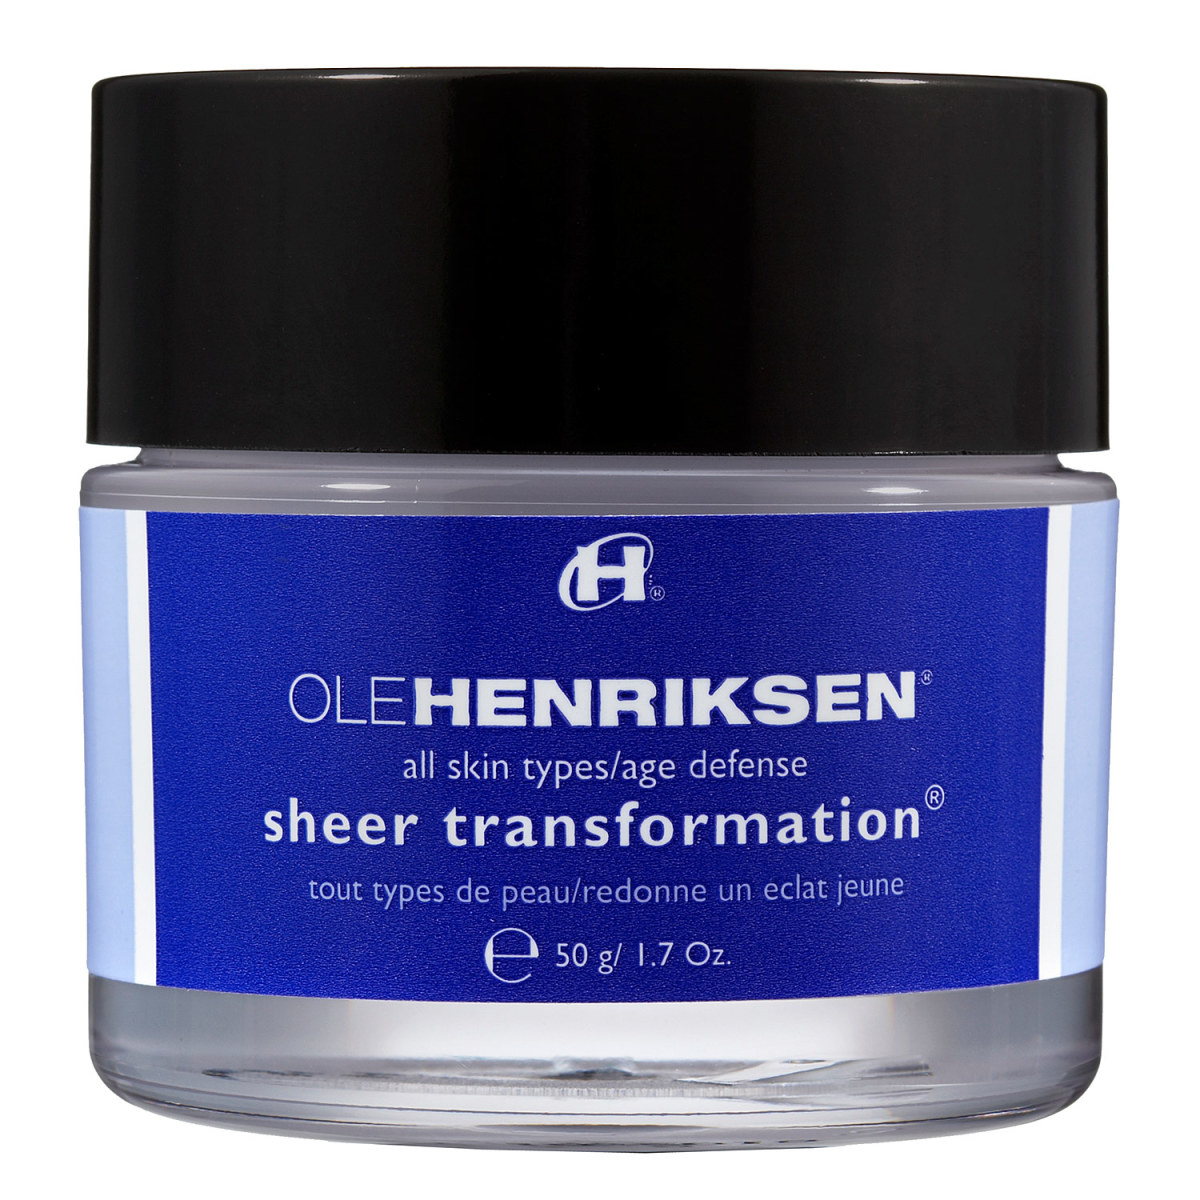 Ole Henriksen Sheer Transformation, $40, available at Sephora